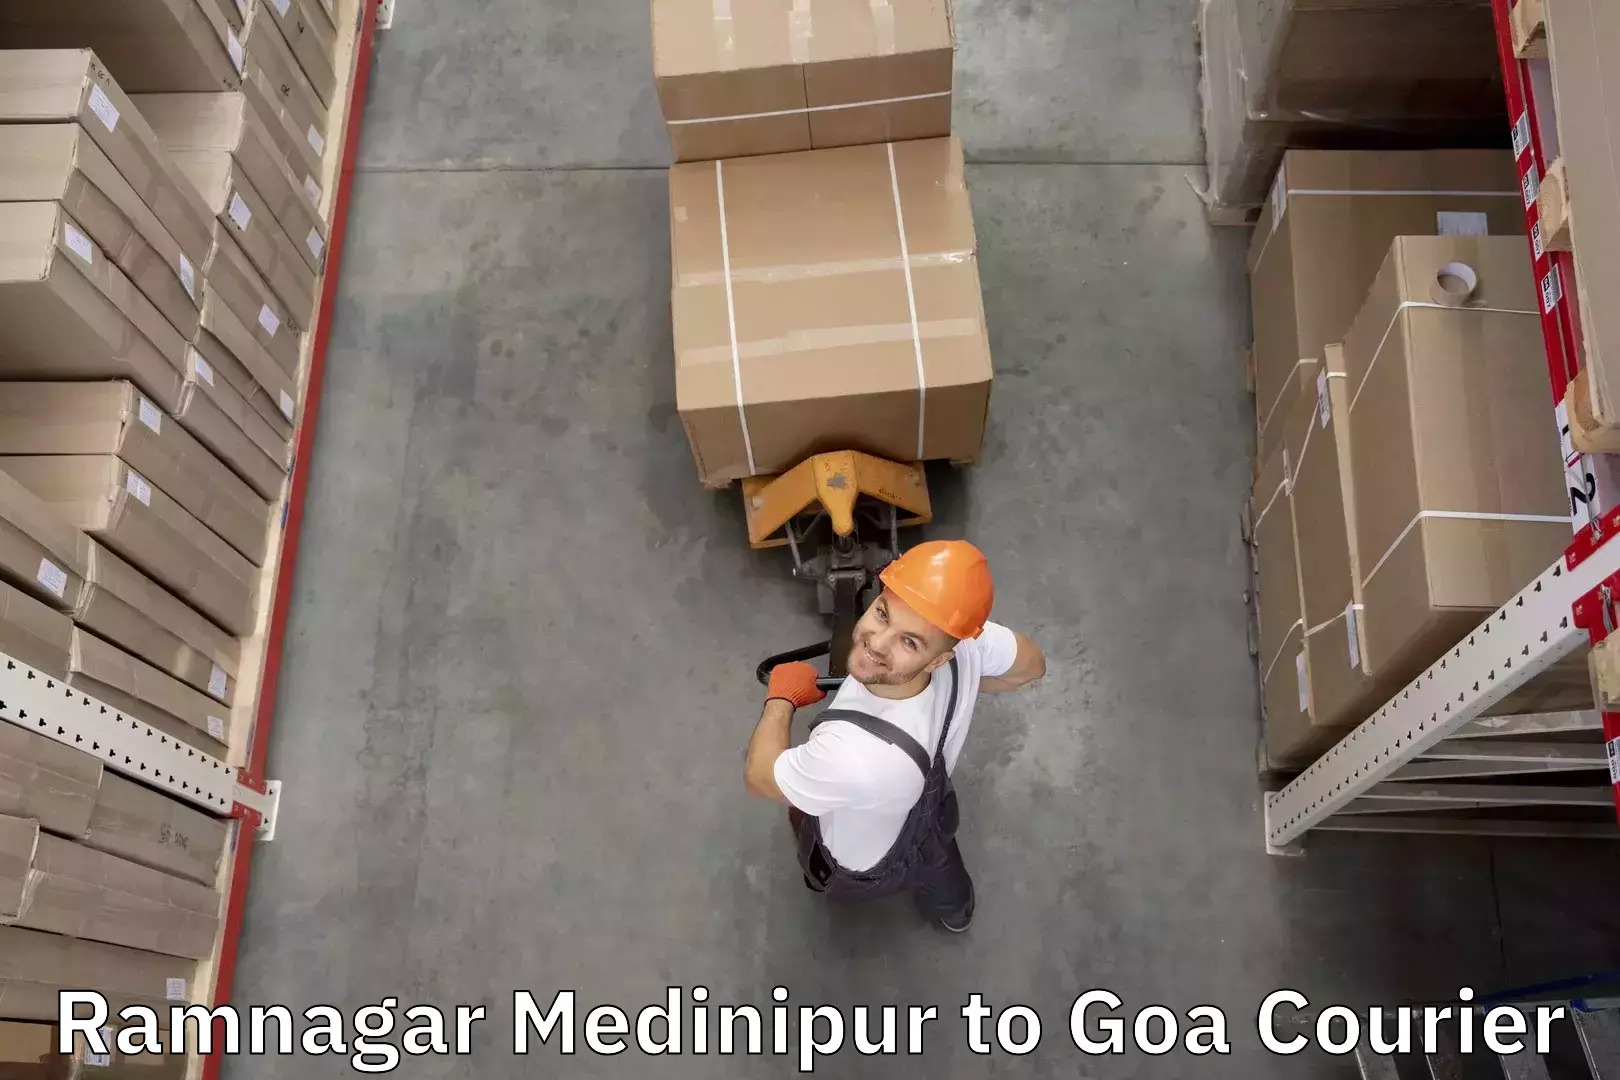 Baggage relocation service Ramnagar Medinipur to Goa